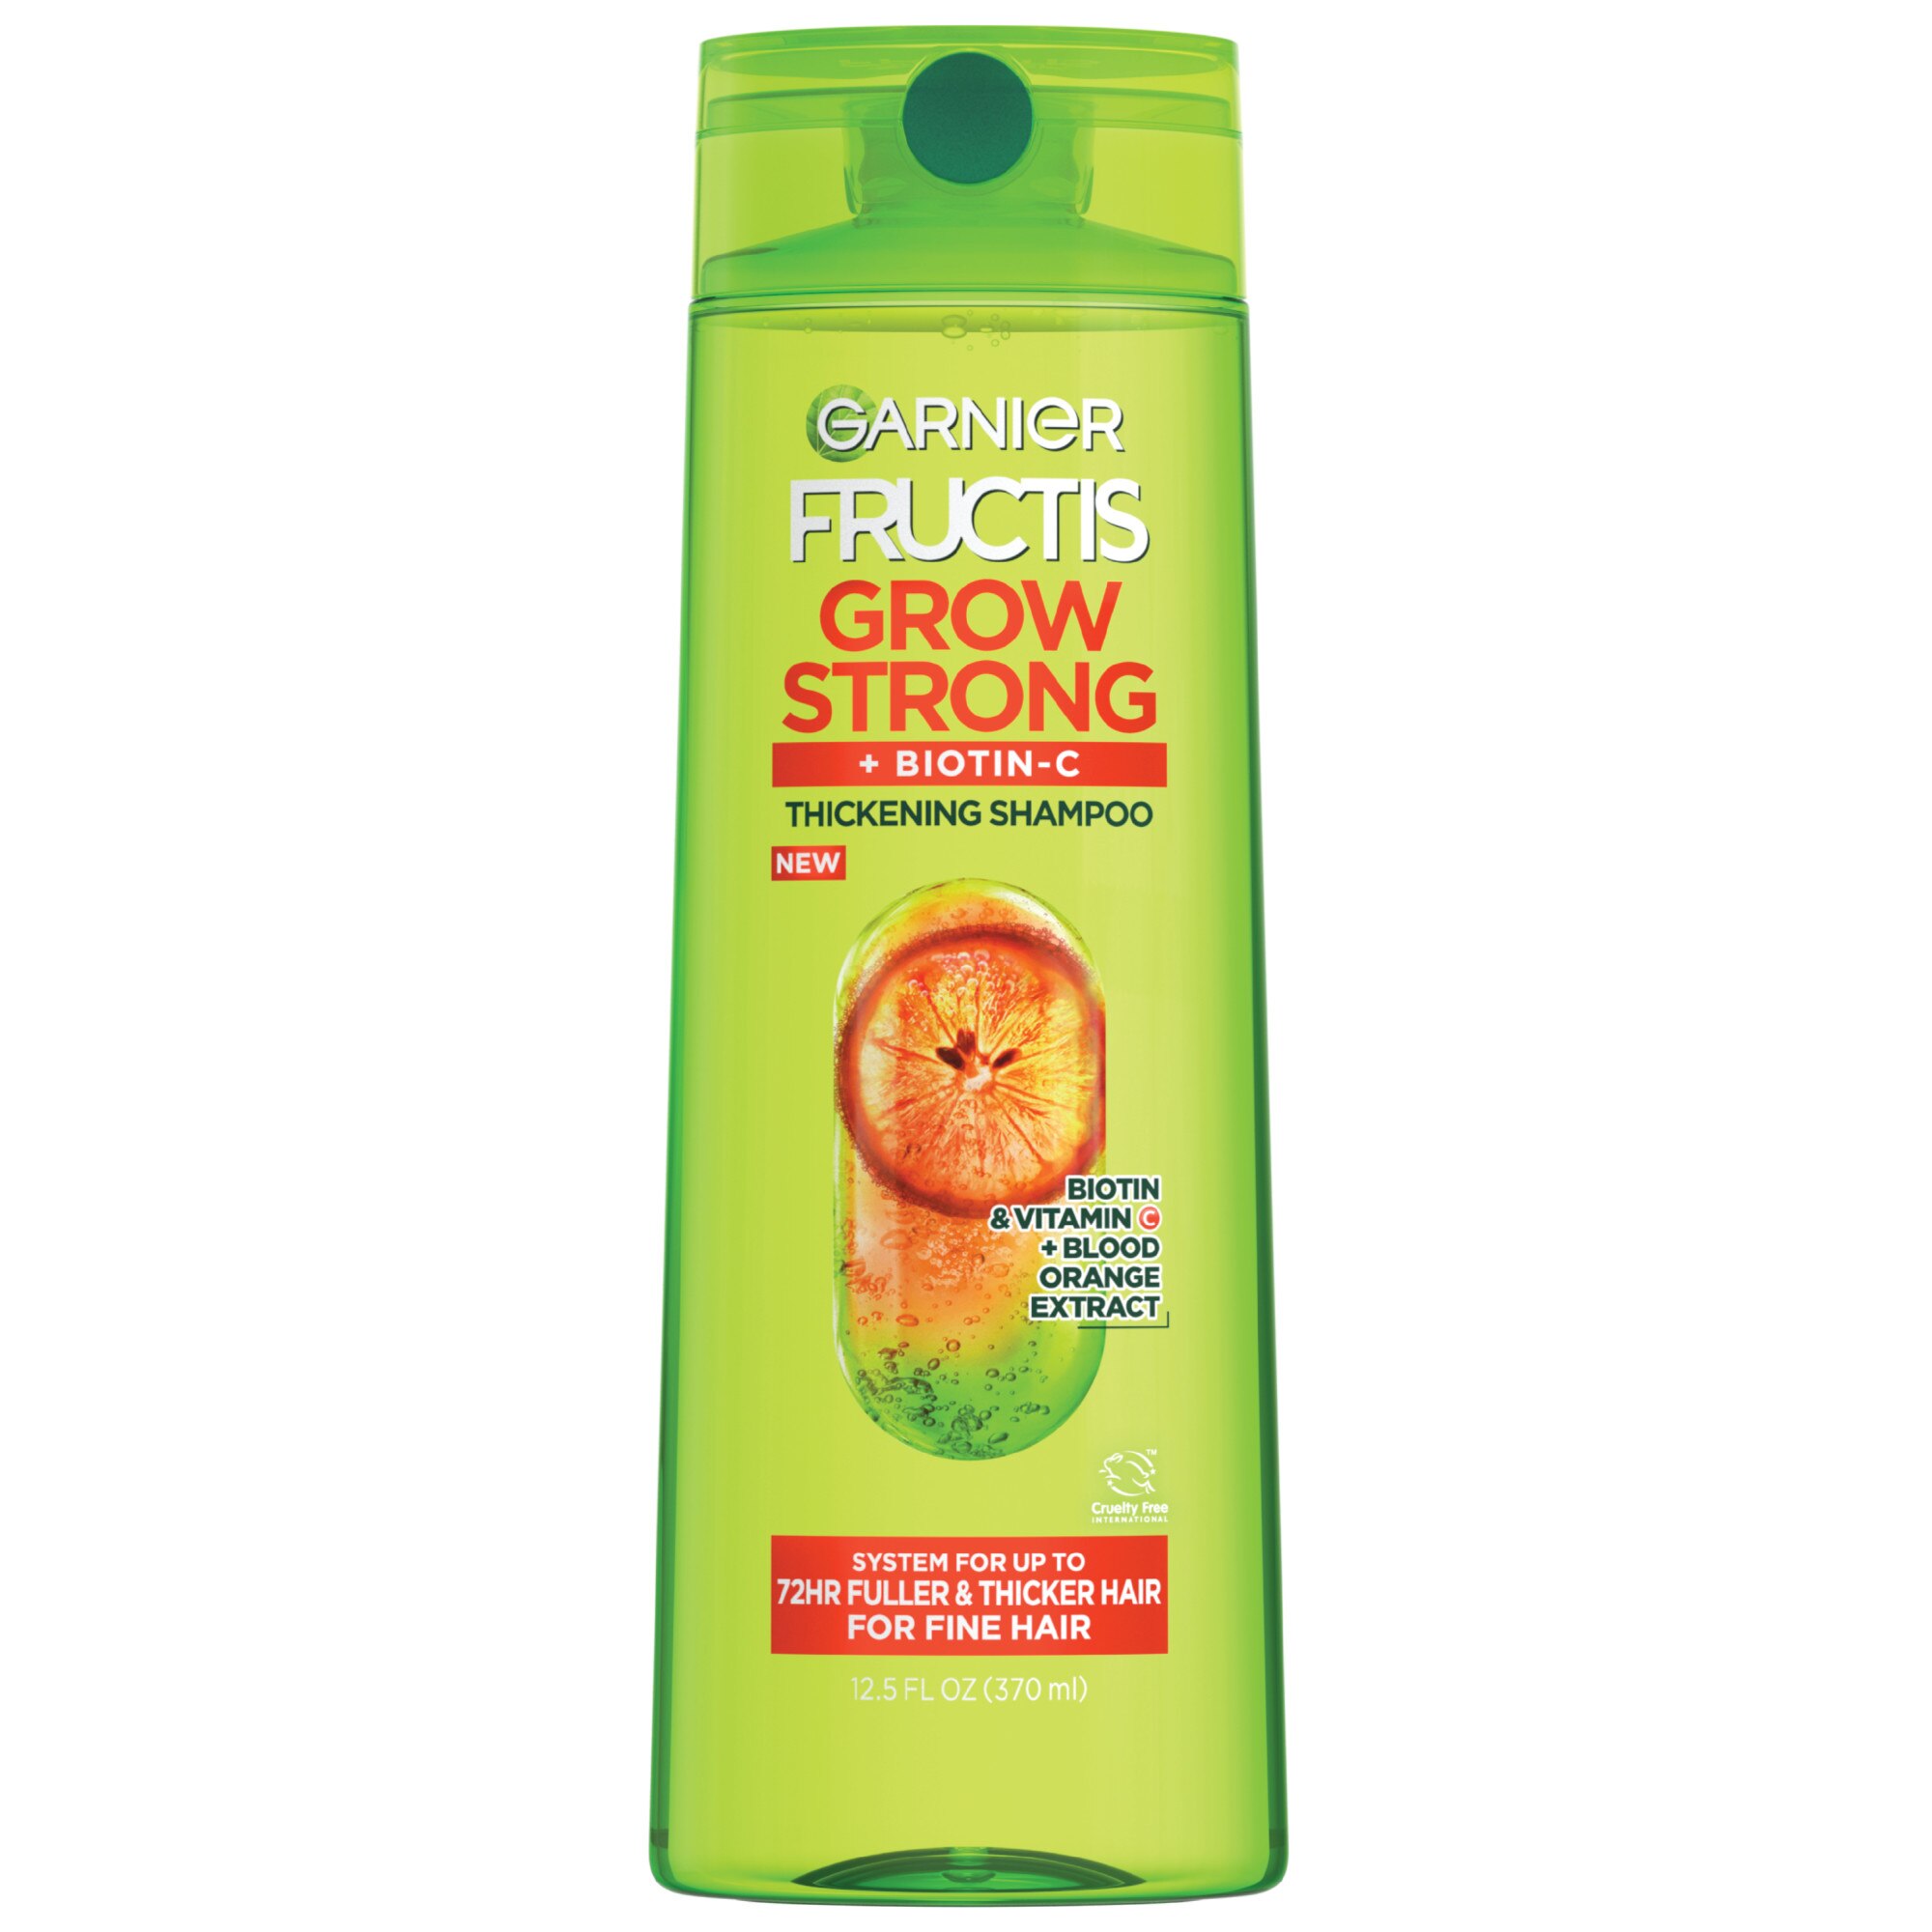 Garnier Fructis Grow Strong Thickening Shampoo